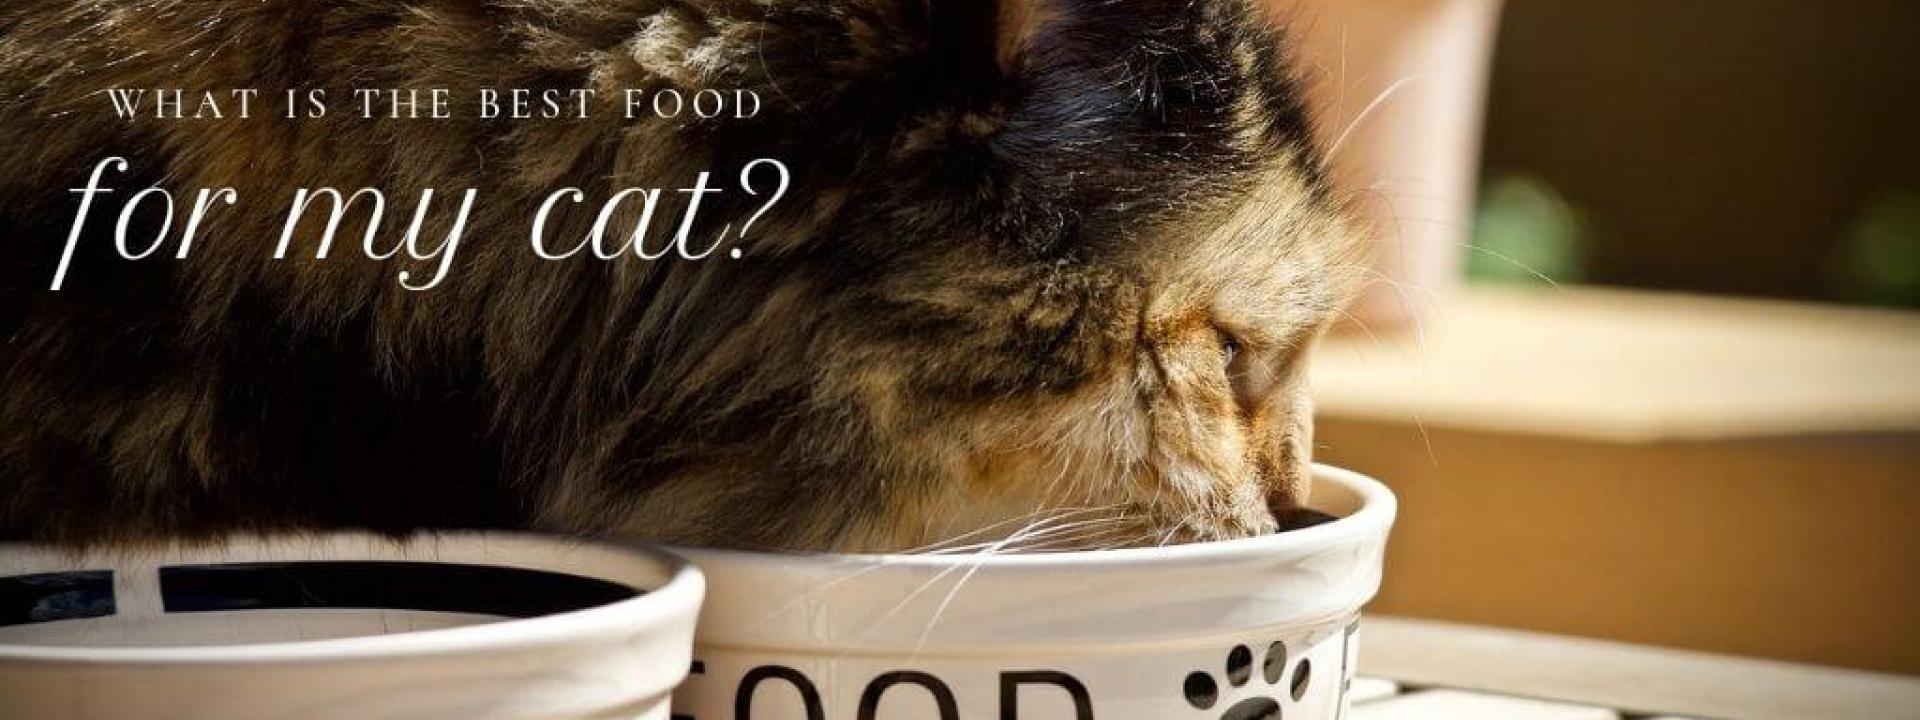 best-cat-food-blog-header.jpg